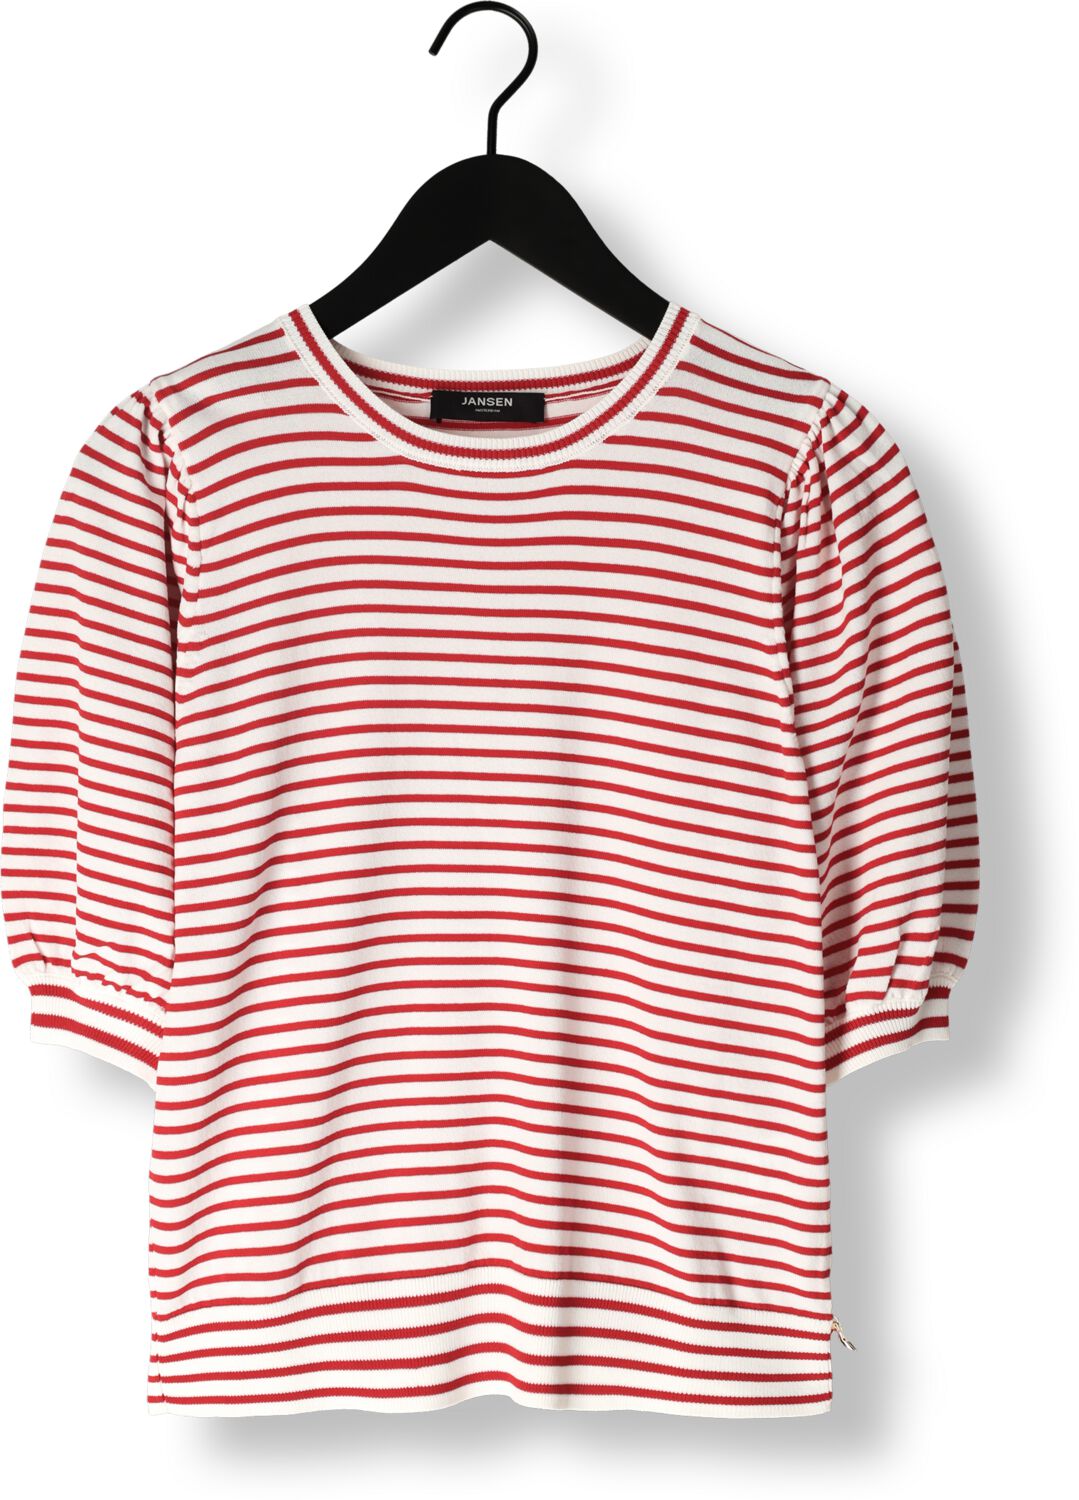 JANSEN AMSTERDAM Dames Tops & T-shirts K136 Knit Top 3 4 Sleeve Rood